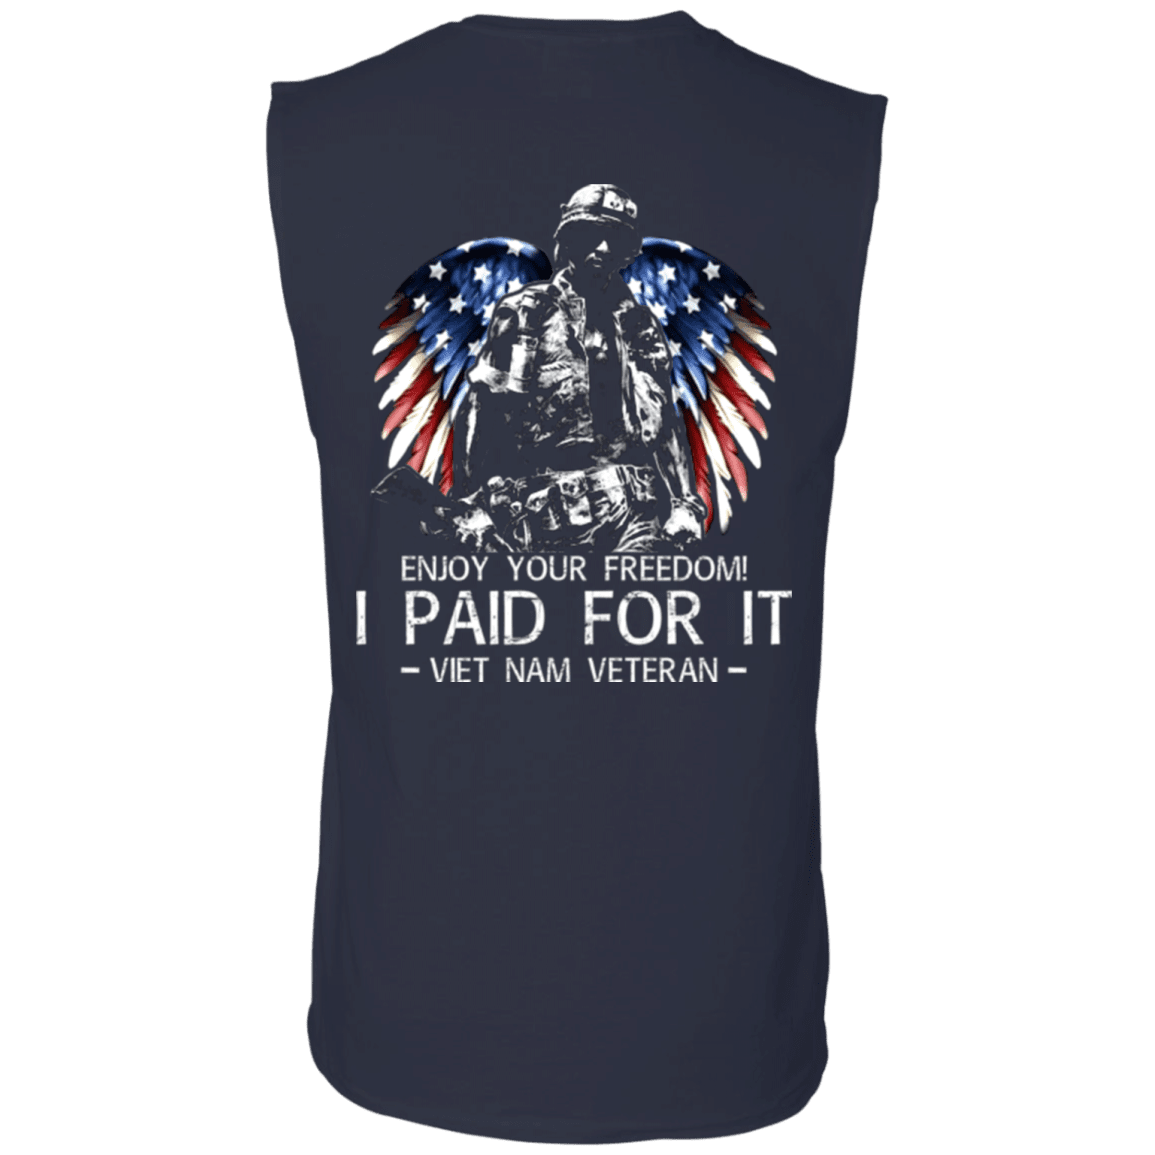 Military T-Shirt "Vietnam Veteran - Enjoy your freedom I paid for it" Men Back-TShirt-General-Veterans Nation